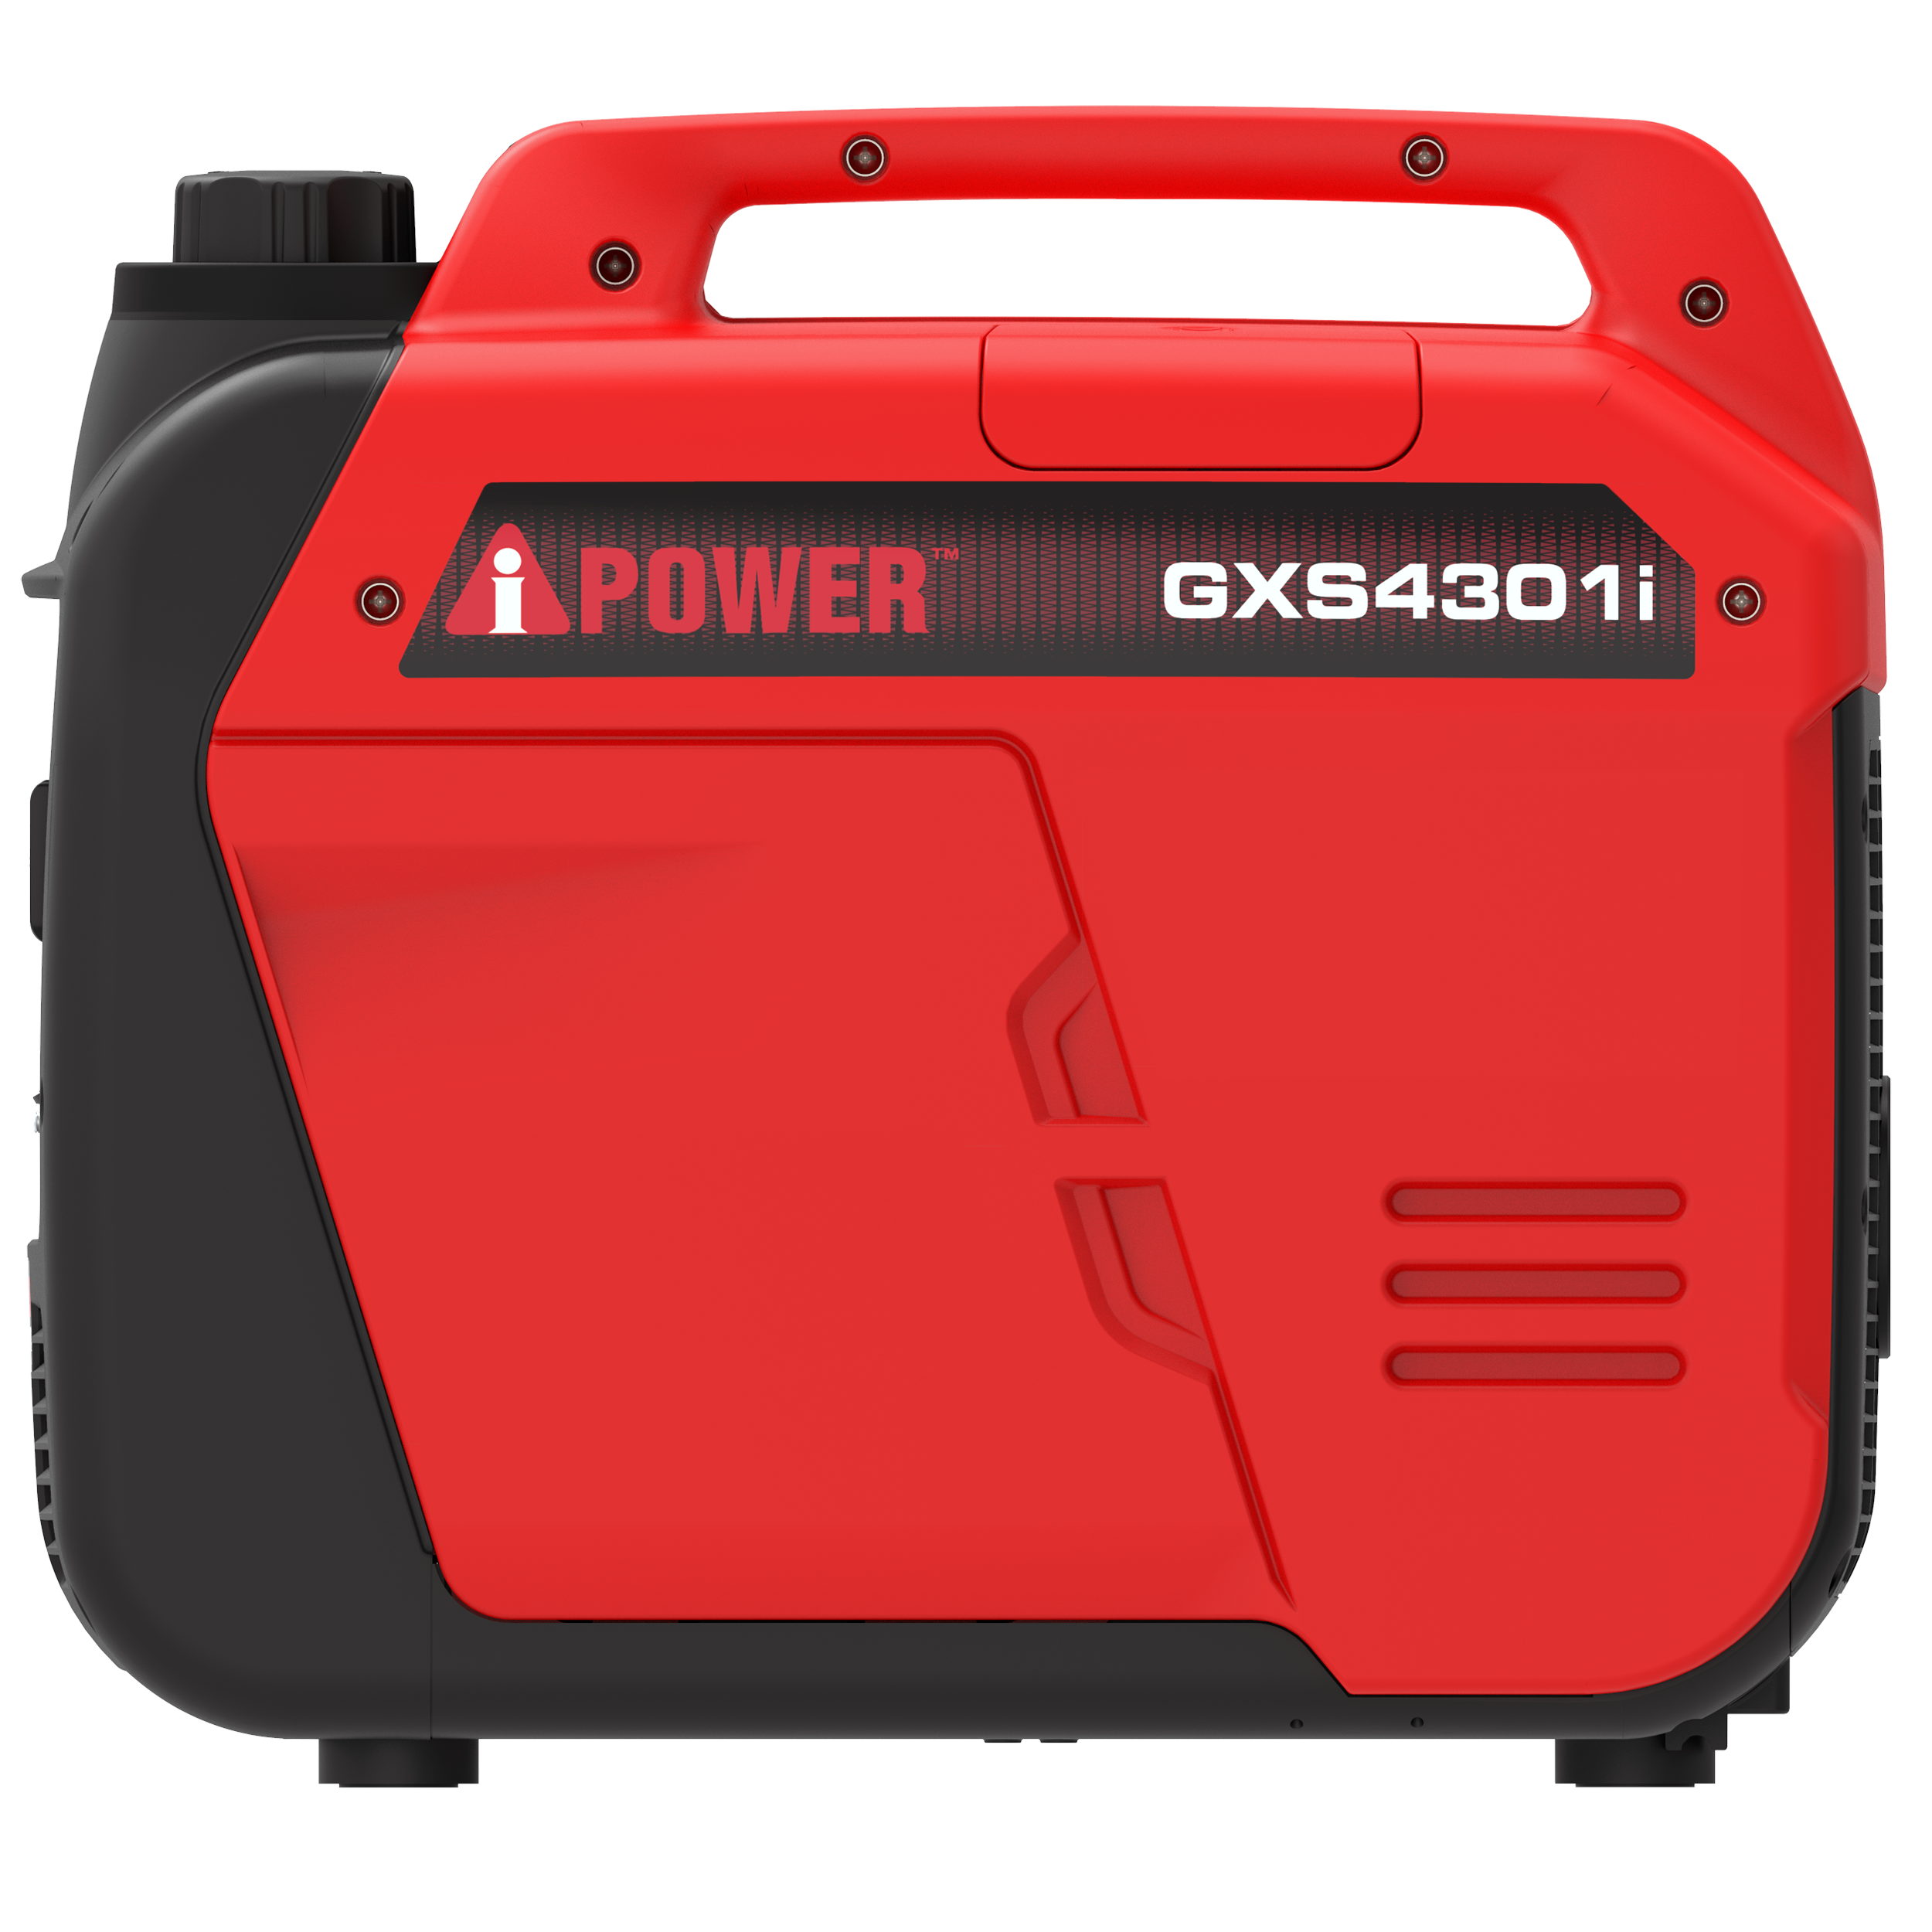 GXS4301i - Inverter Generator